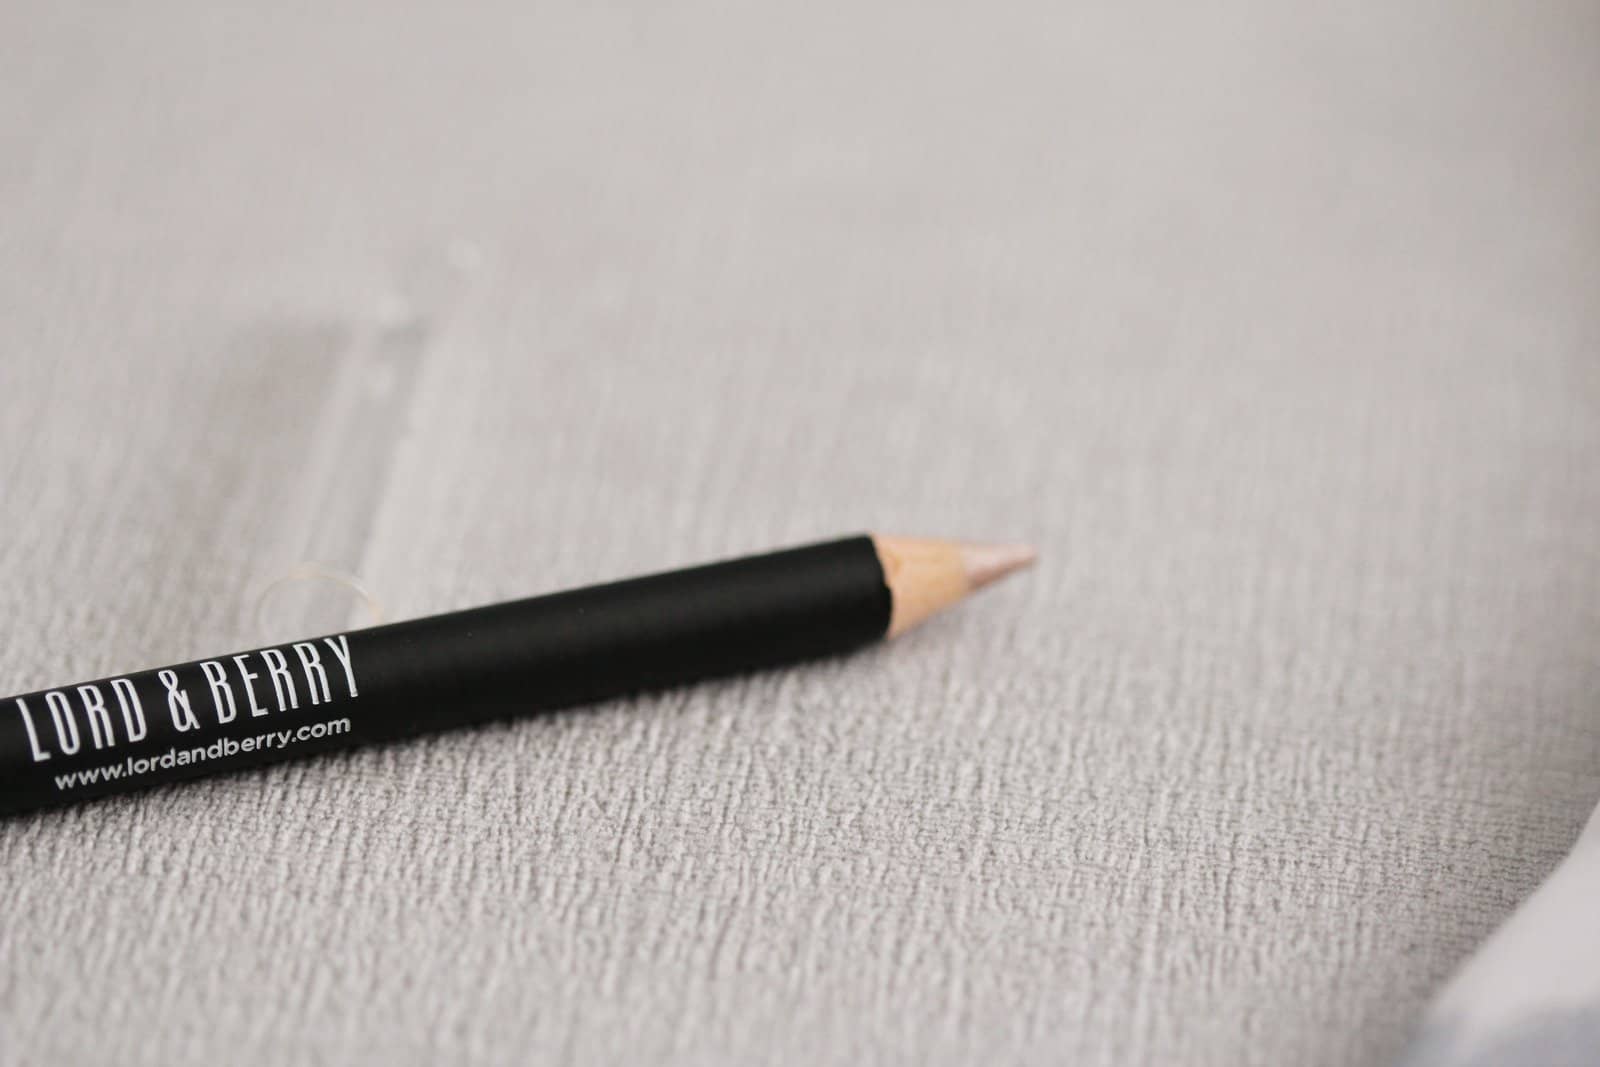  Lord & Berry strobing pencil - Ms Tantrum Blog